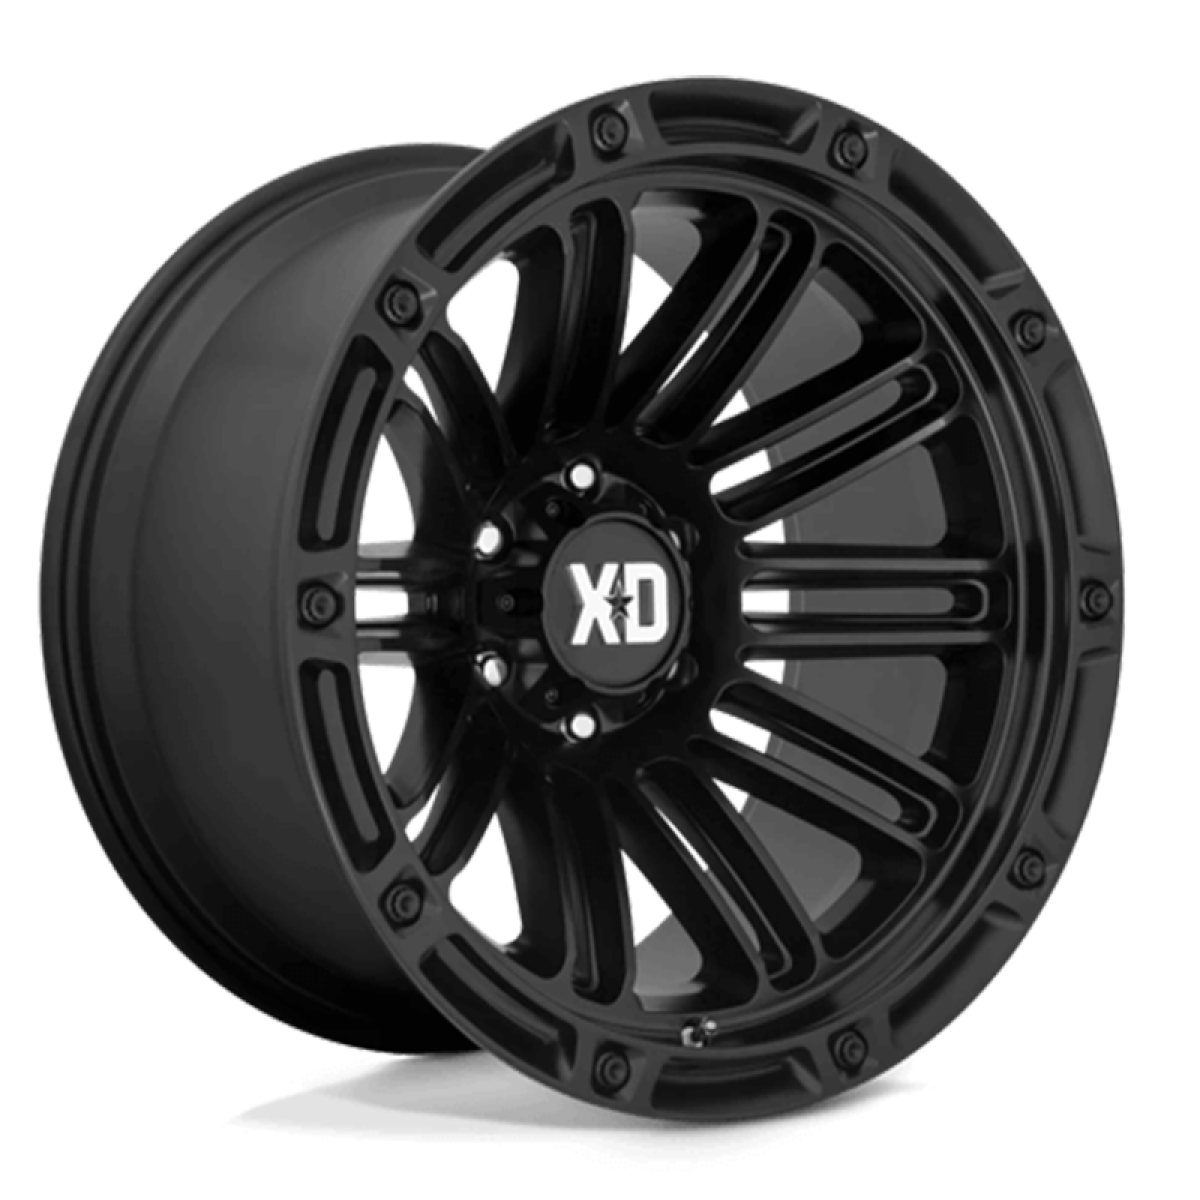 XD Series By KMC Double Deuce